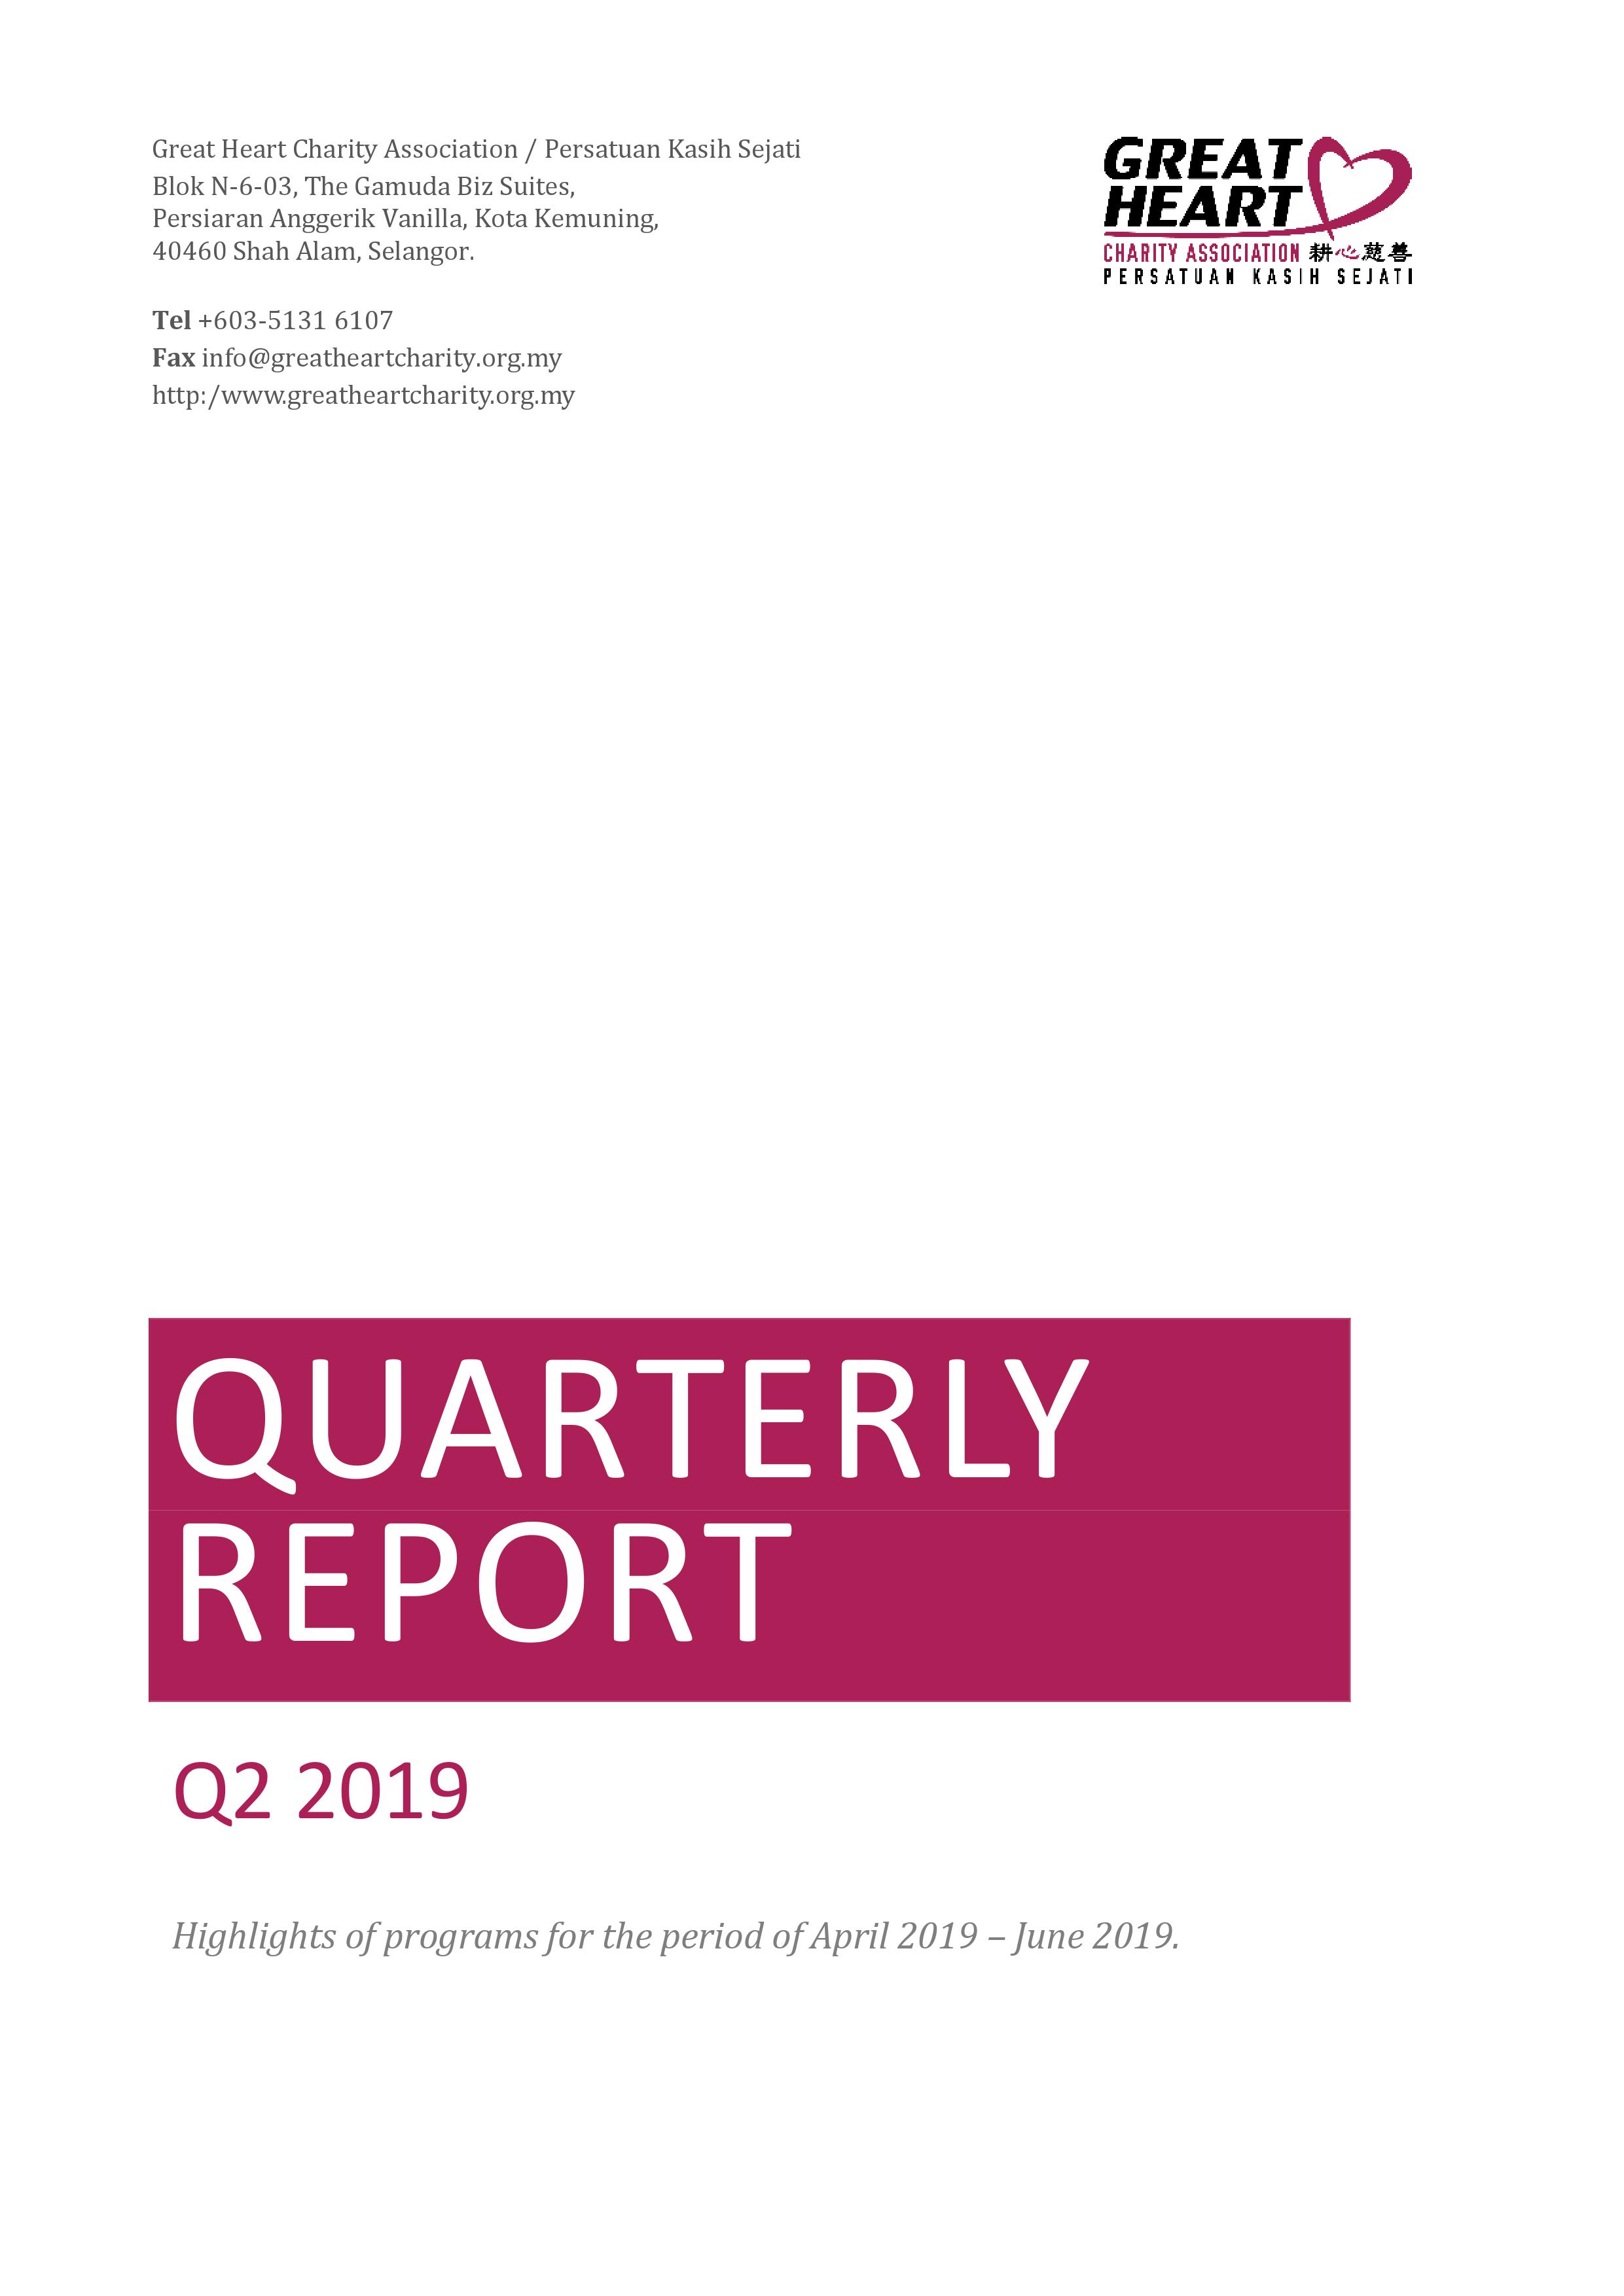 Great Heart Quarterly Report - Quarter 2 - 2019